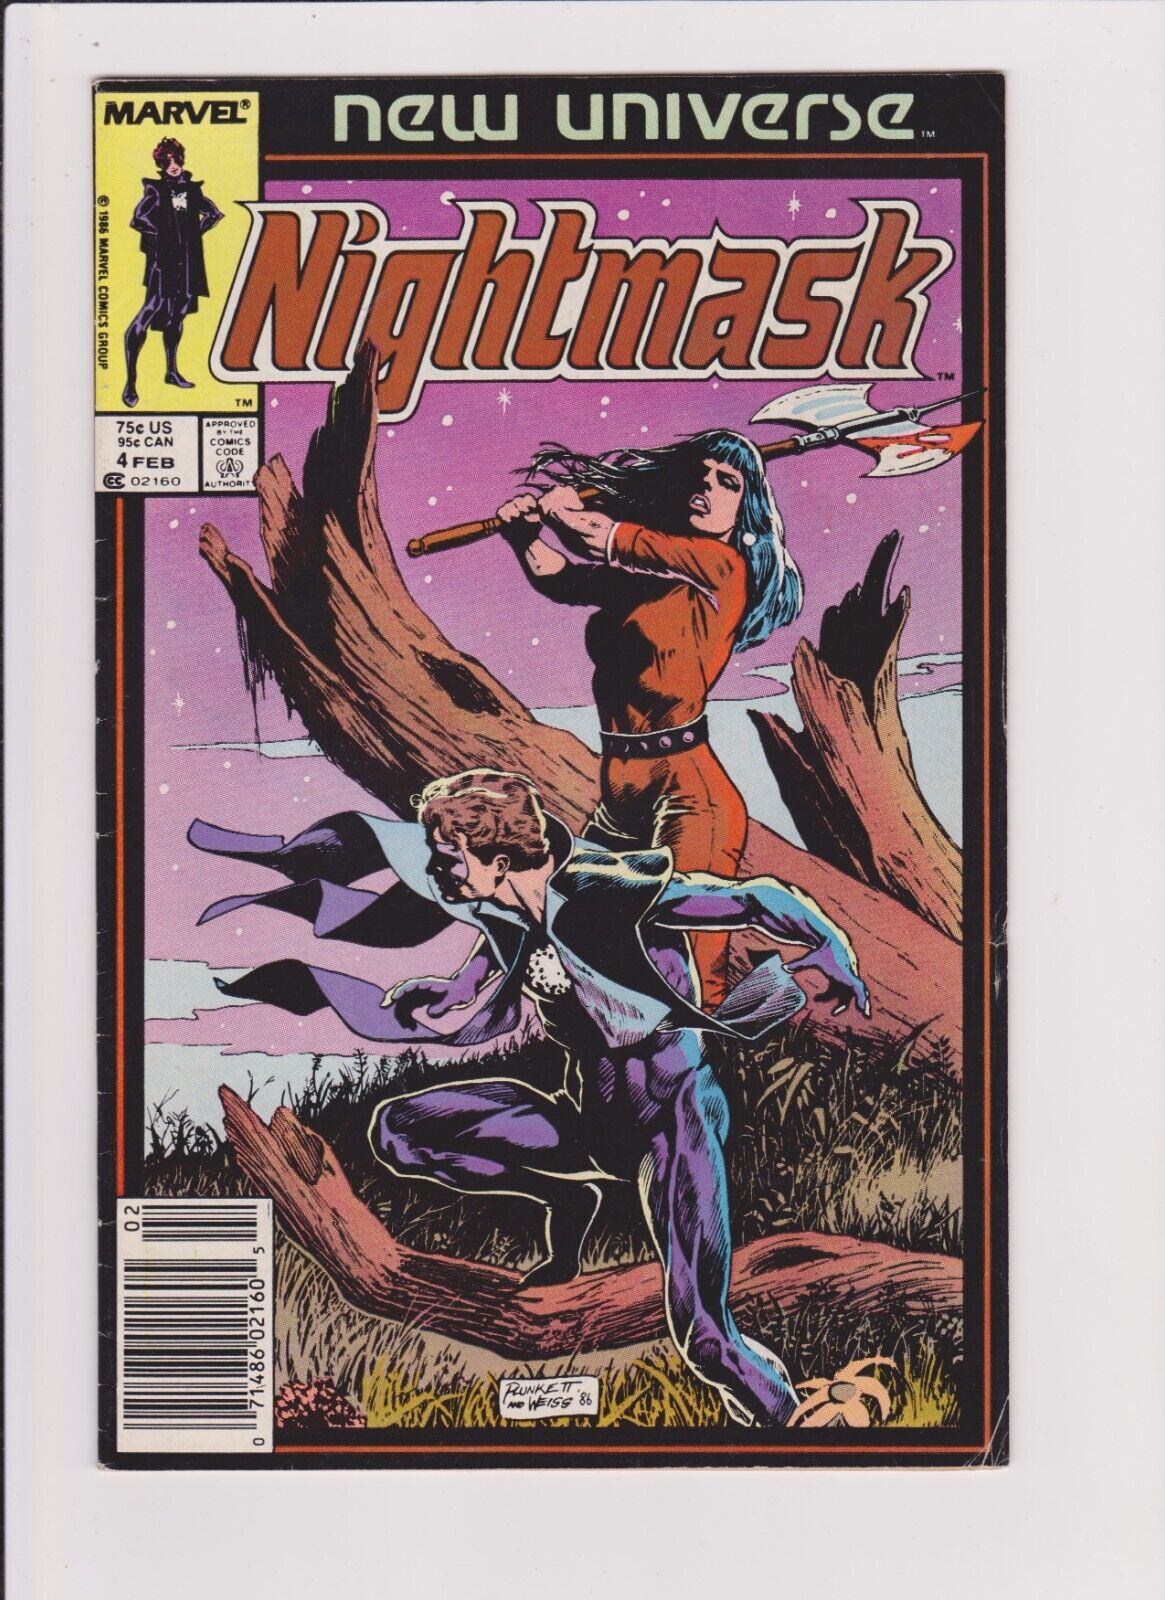 1986 Nightmask #4 NEW UNIVERSE Vintage Marvel Comic